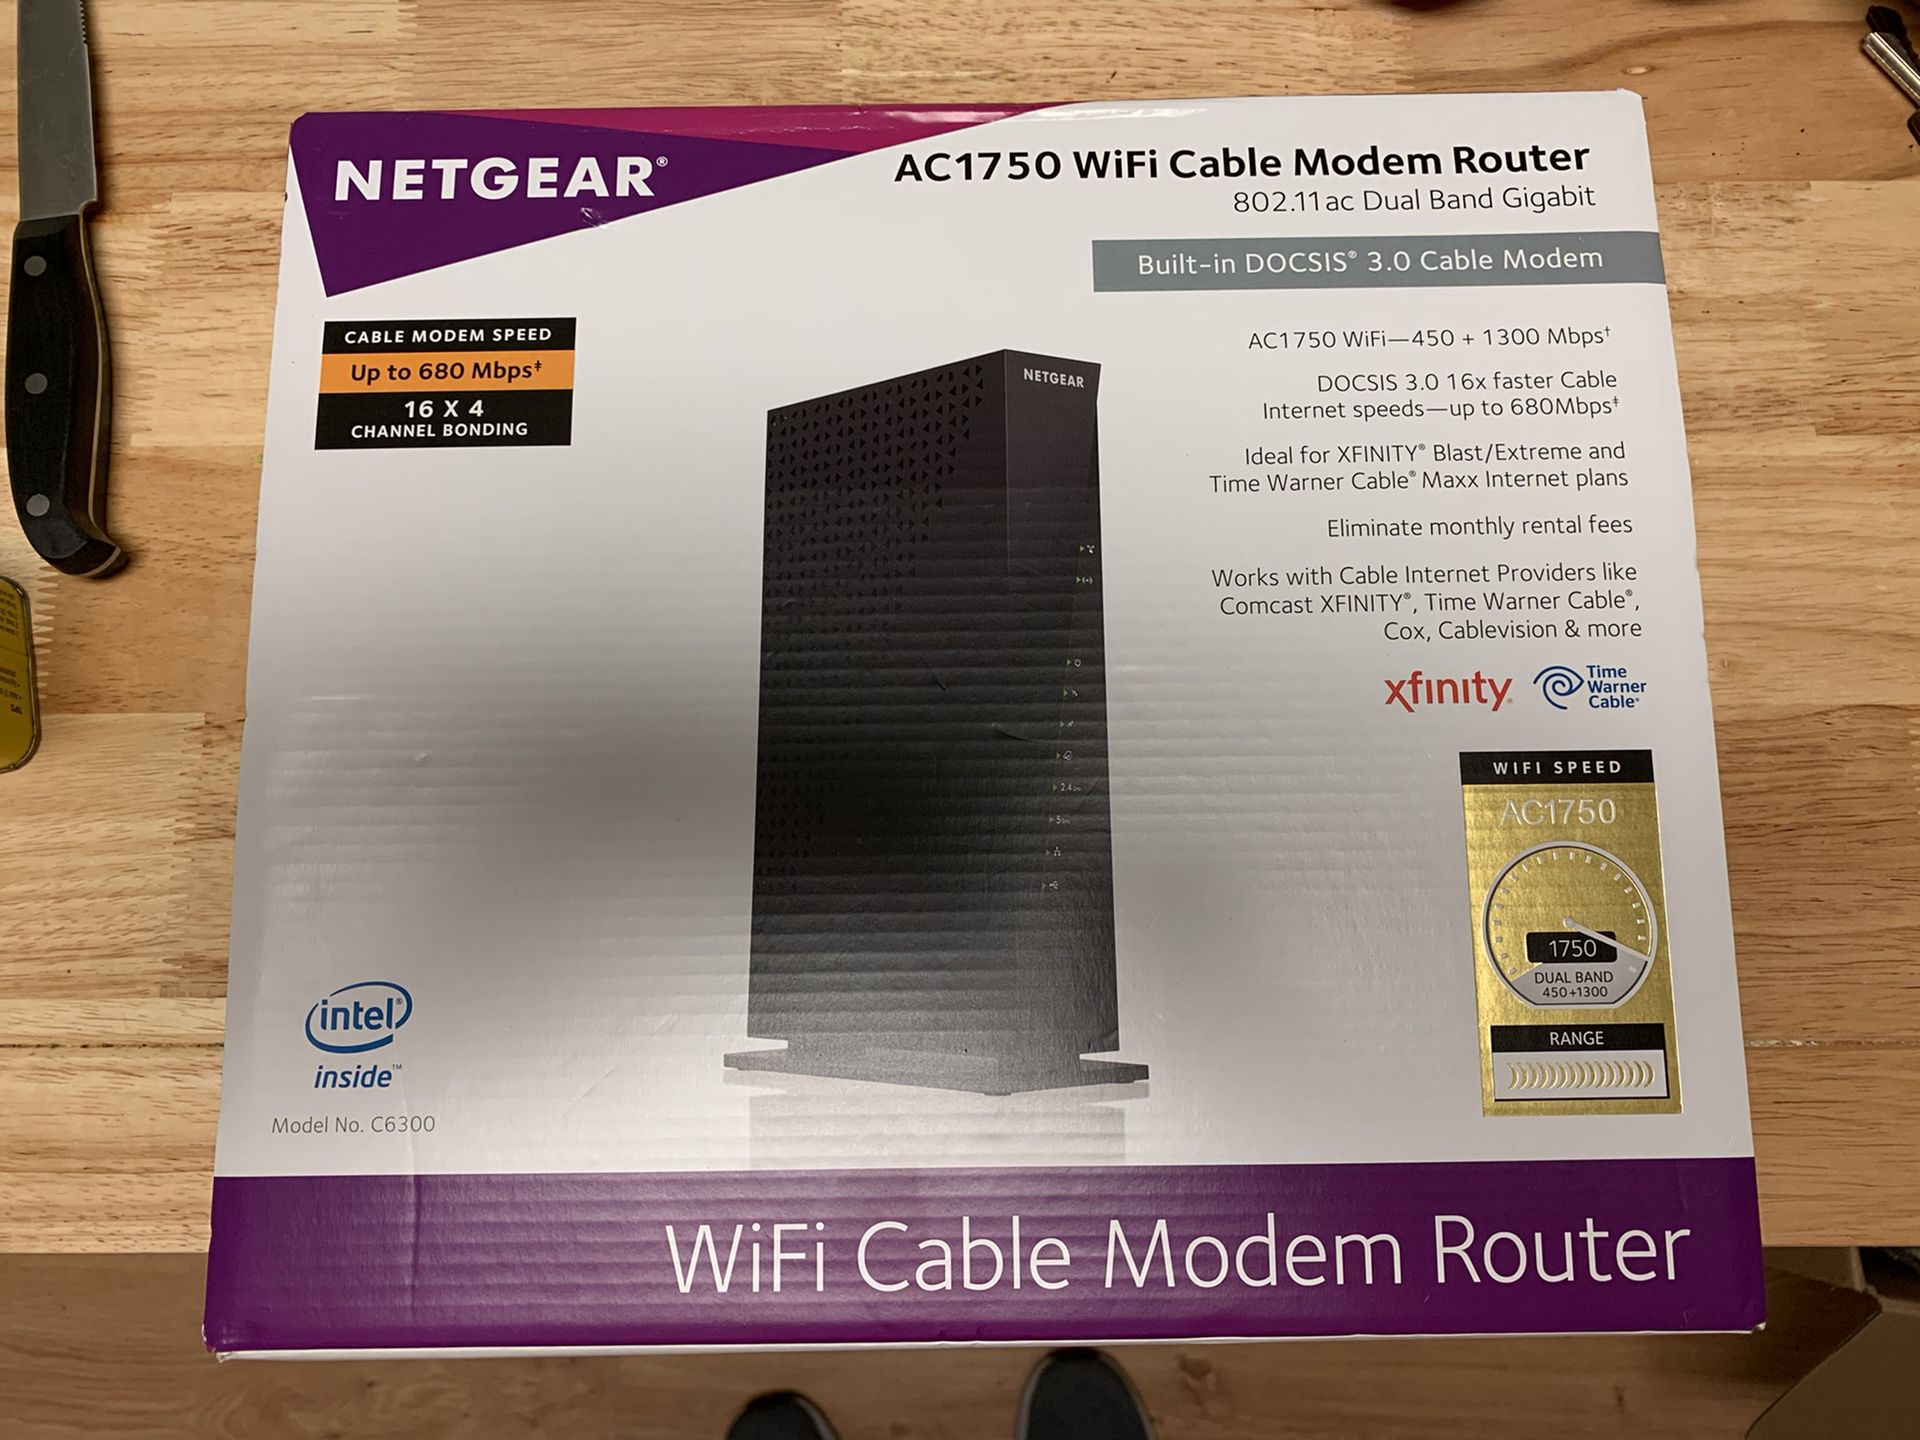 Netgear AC1750 Wifi Cable Modem Router 802.11ac dual band DOCIS 3.0